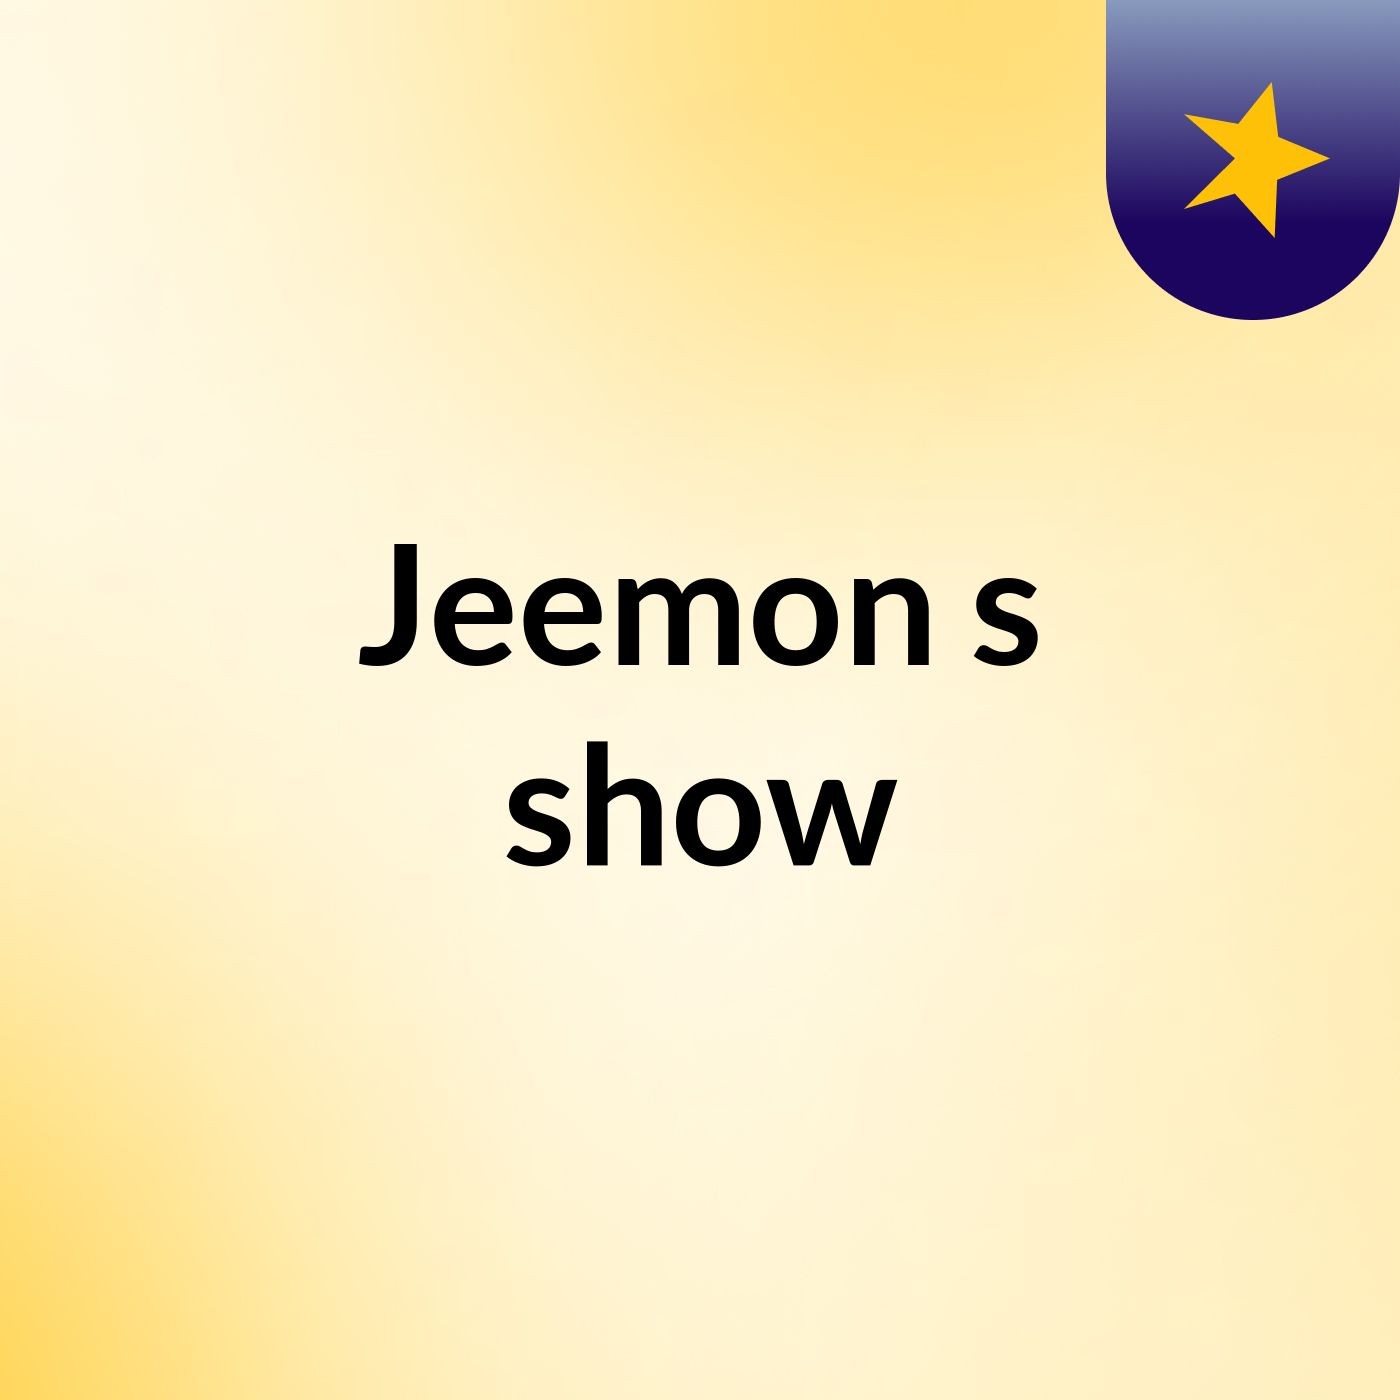 Jeemon's show